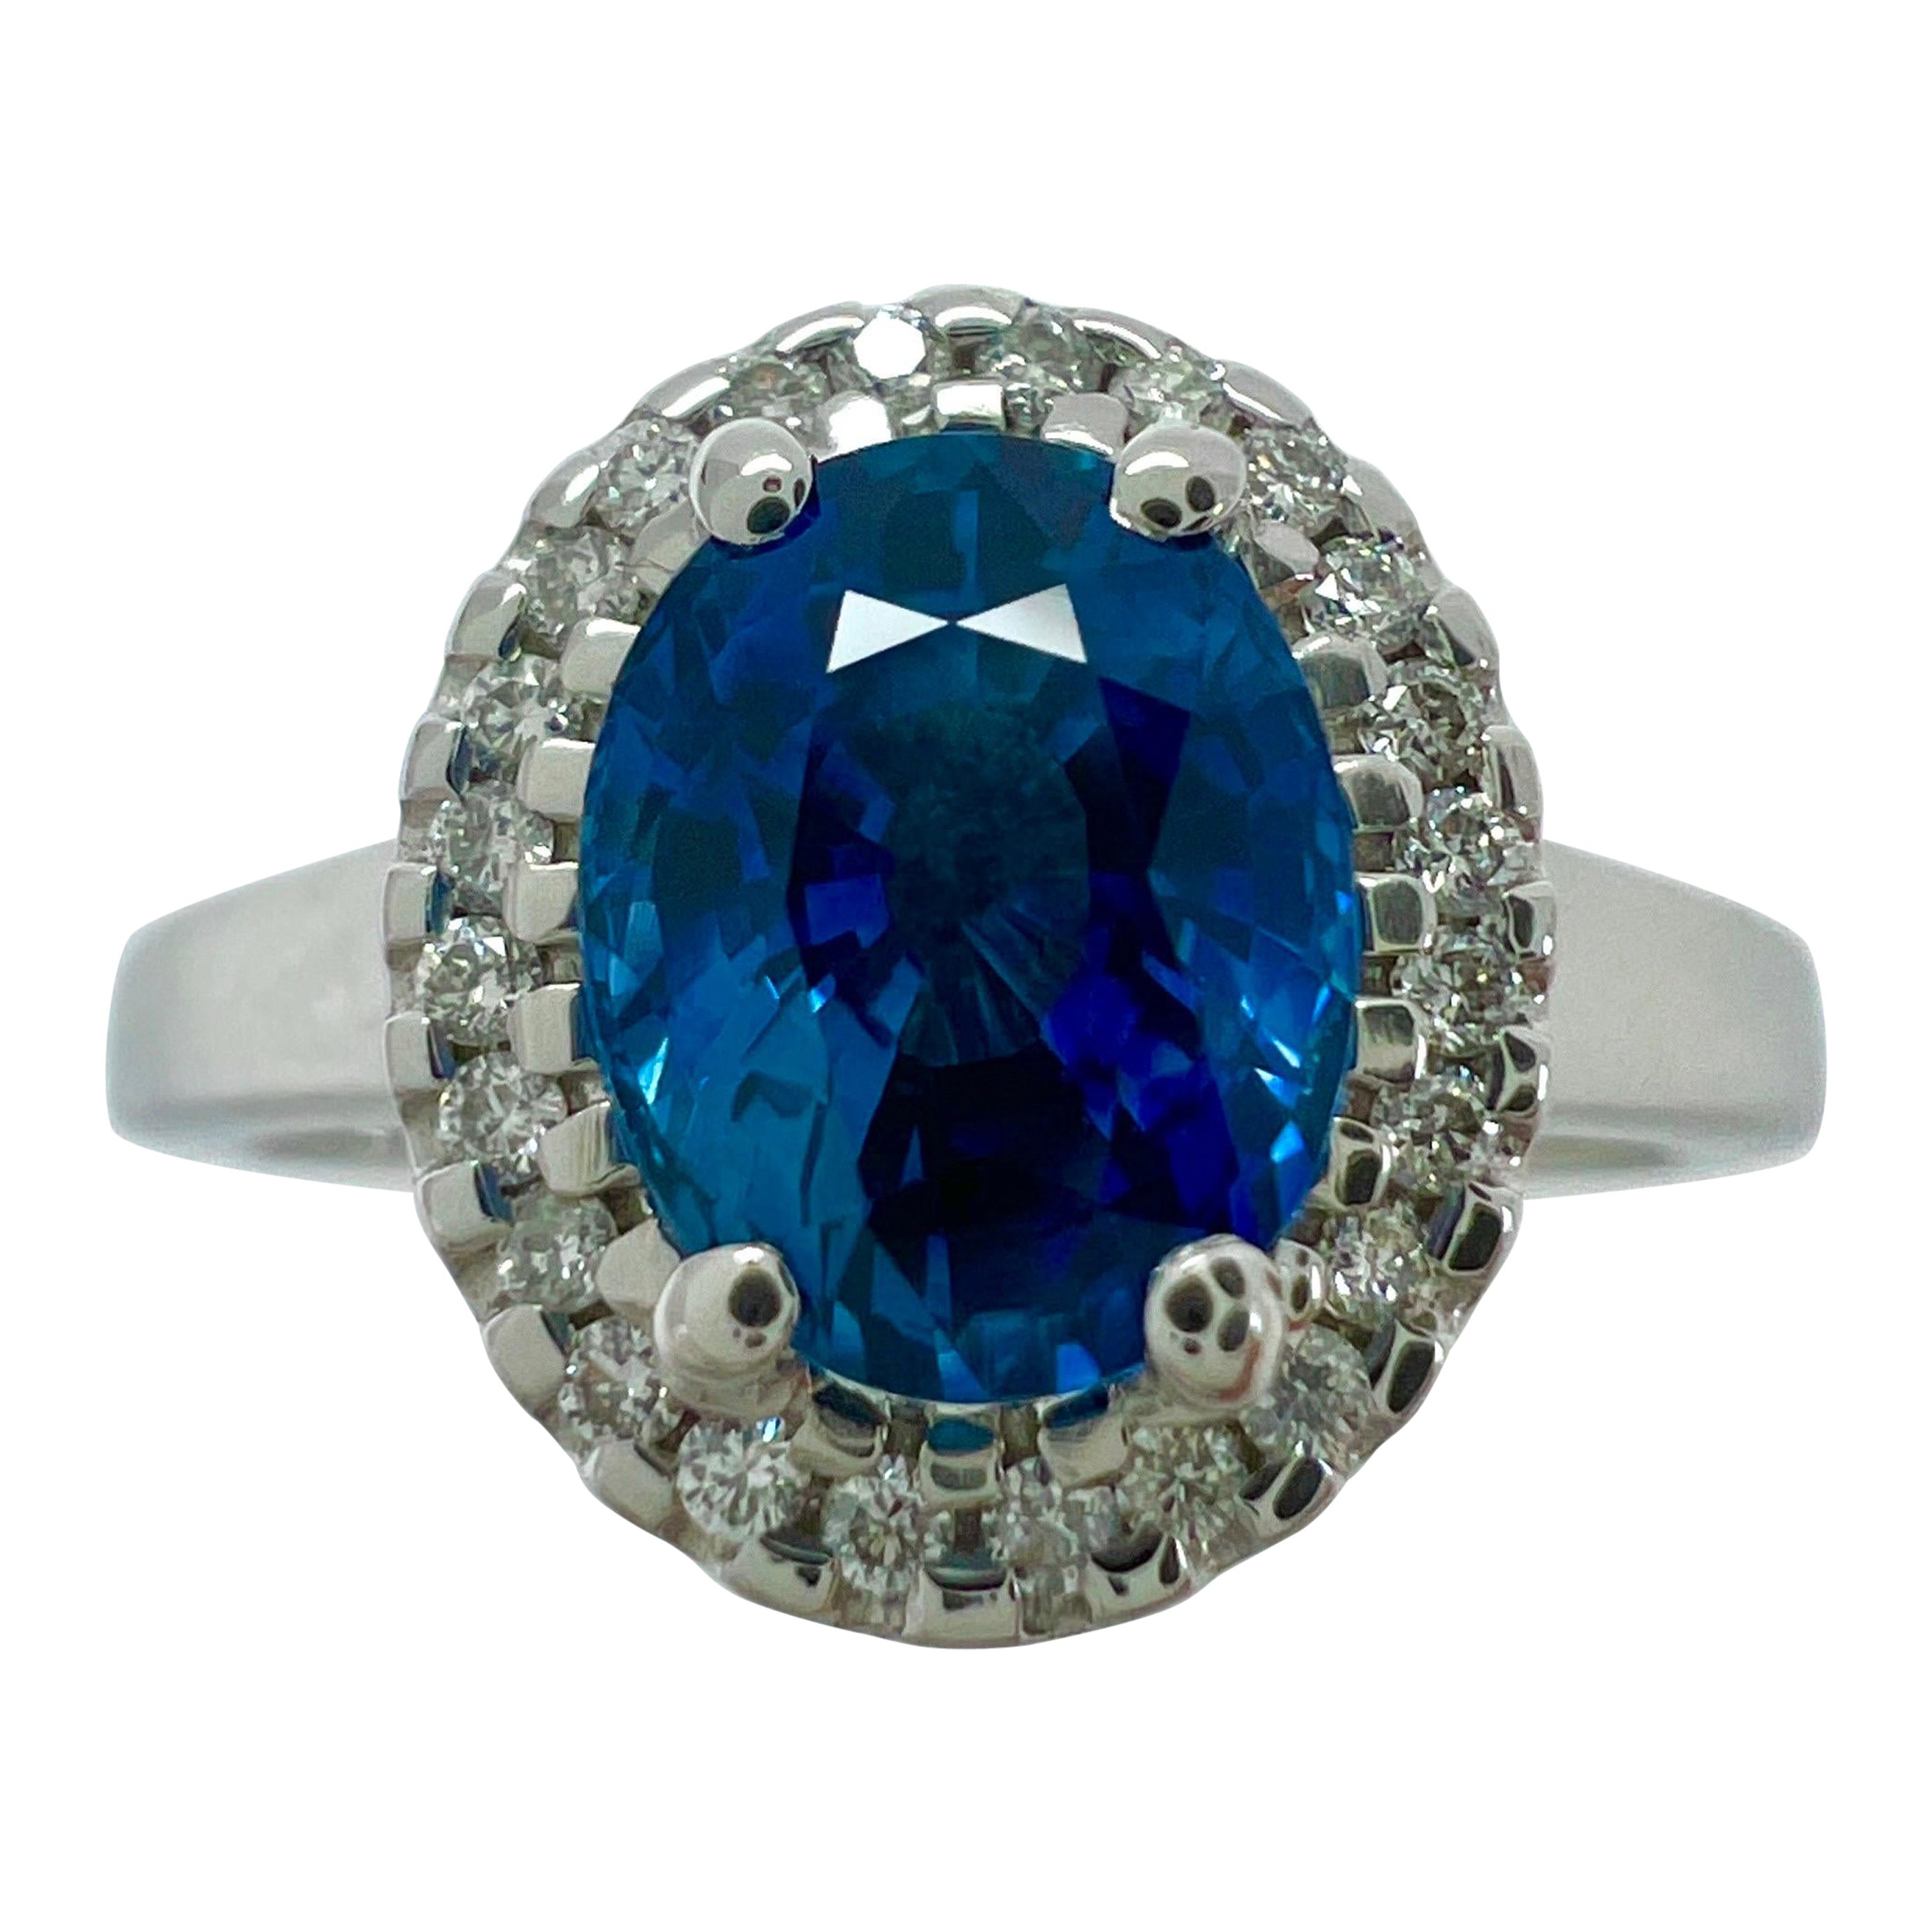 1.56 Carat Fine Vivid Blue Ceylon Sapphire And Diamond 18k White Gold Halo Ring (Bague Halo en or blanc 18k)